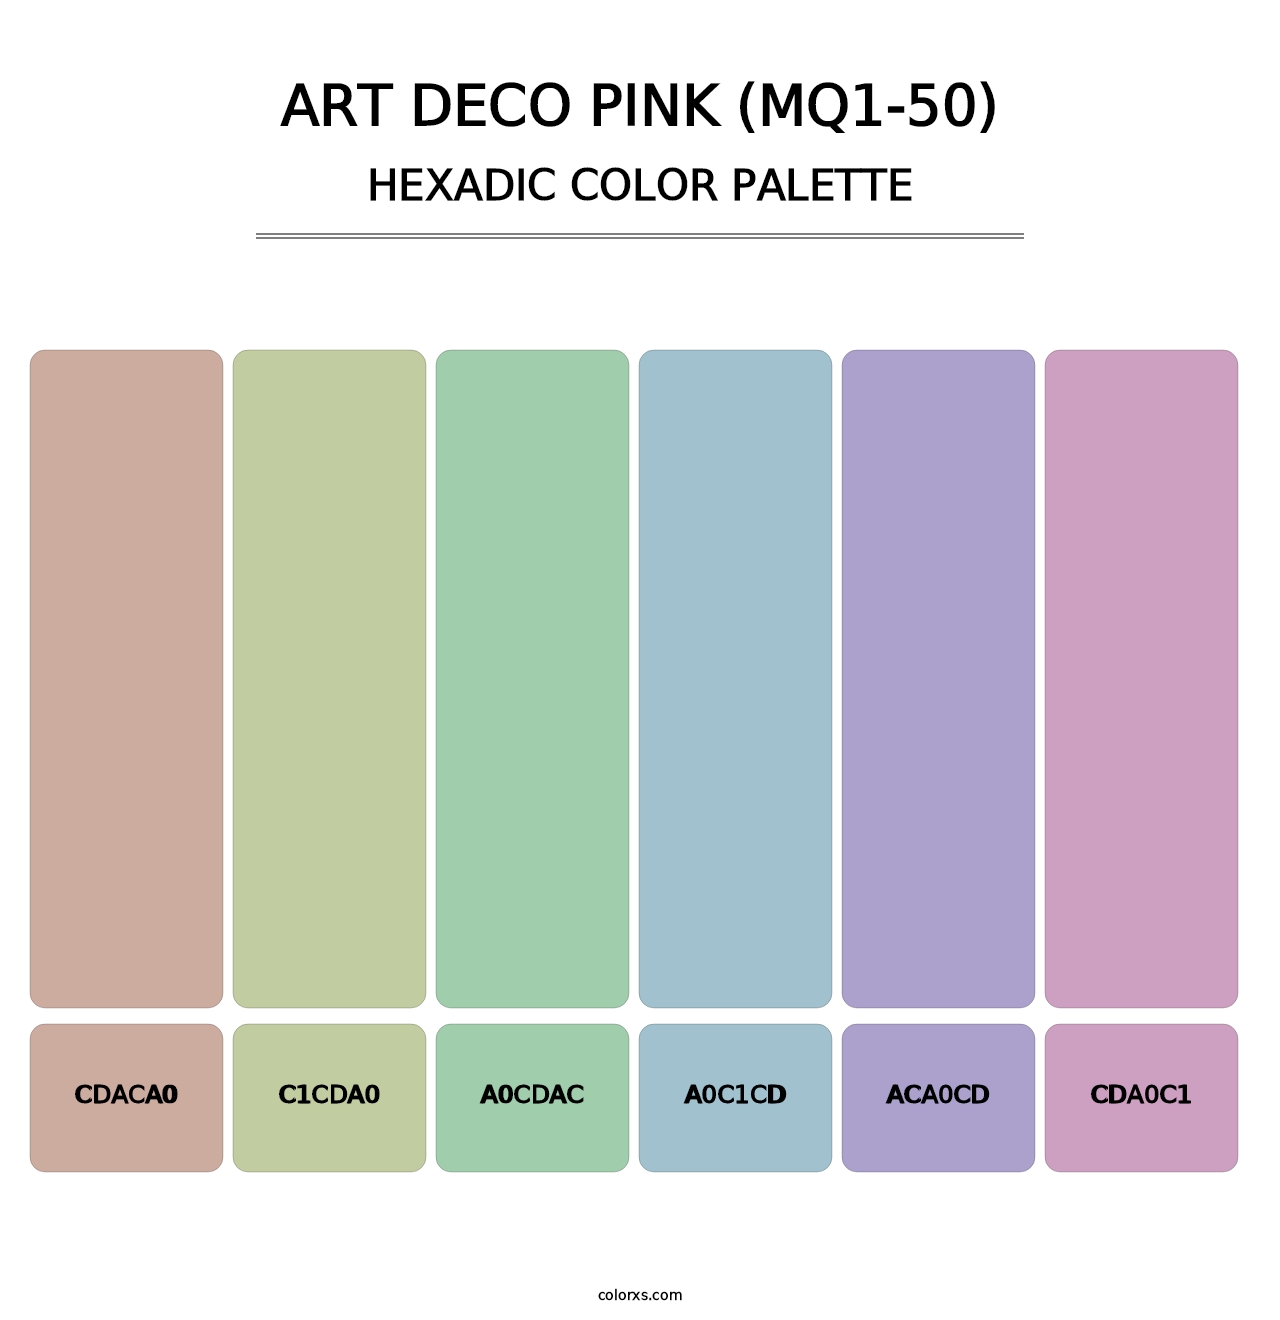 Art Deco Pink (MQ1-50) - Hexadic Color Palette